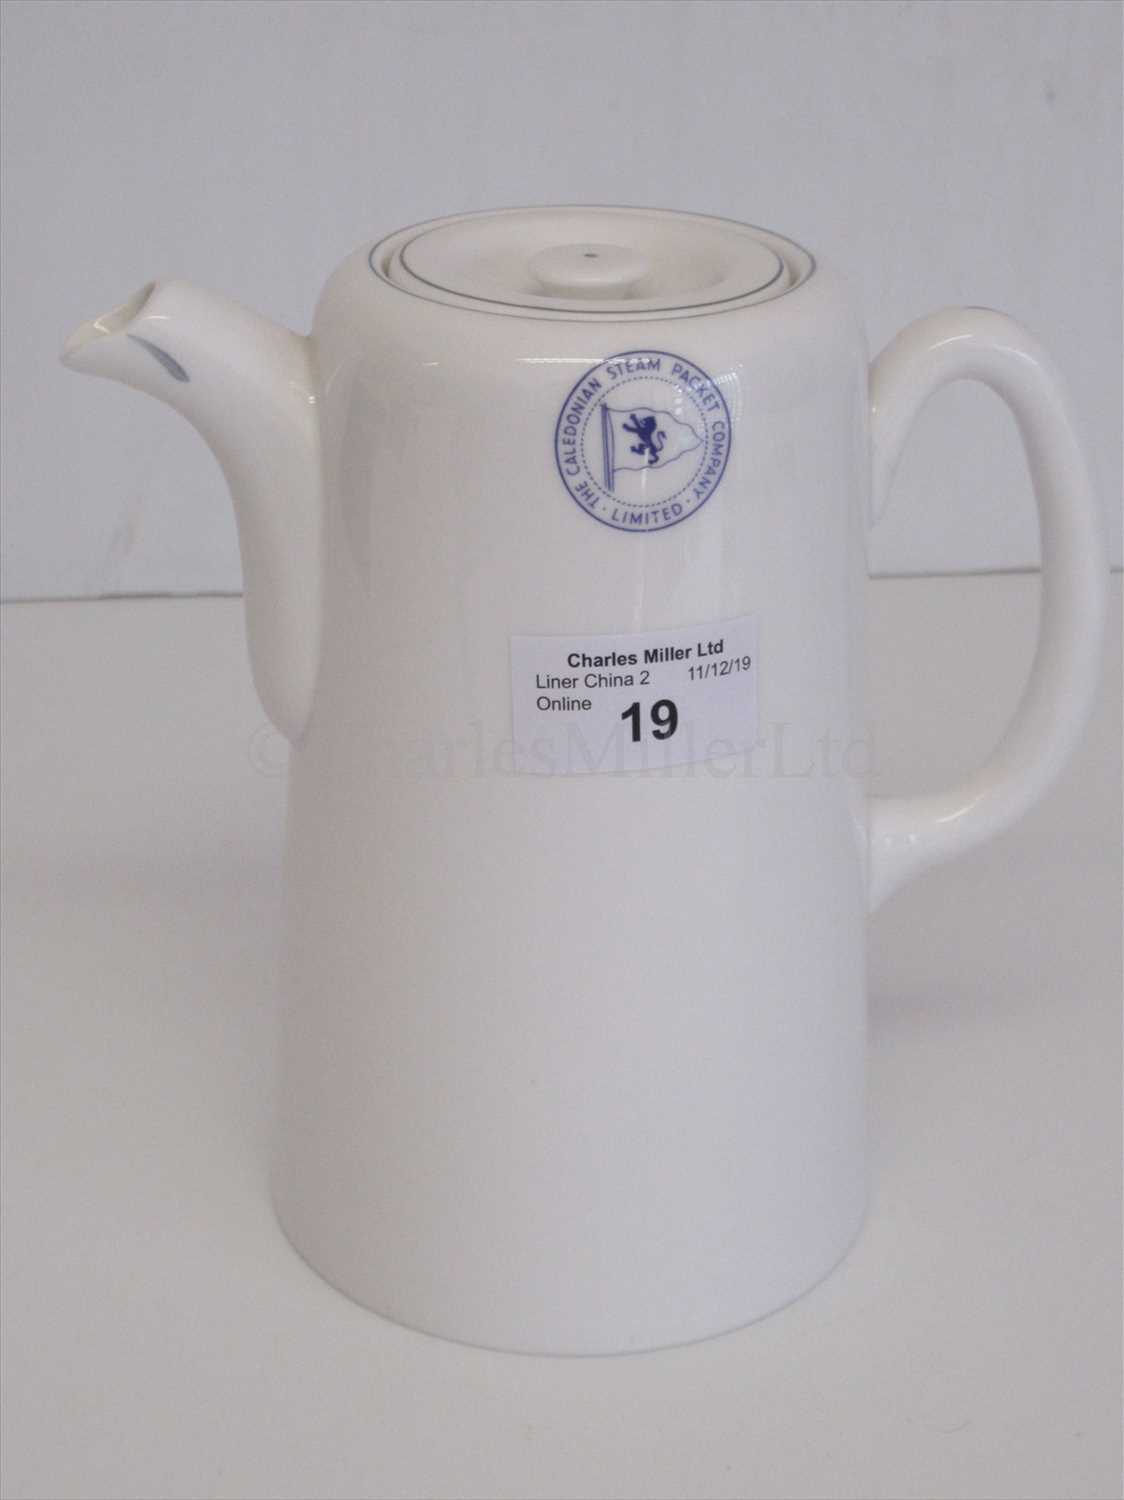 Lot 19 - Caledonian Steam Packet Company Ltd: A coffee pot